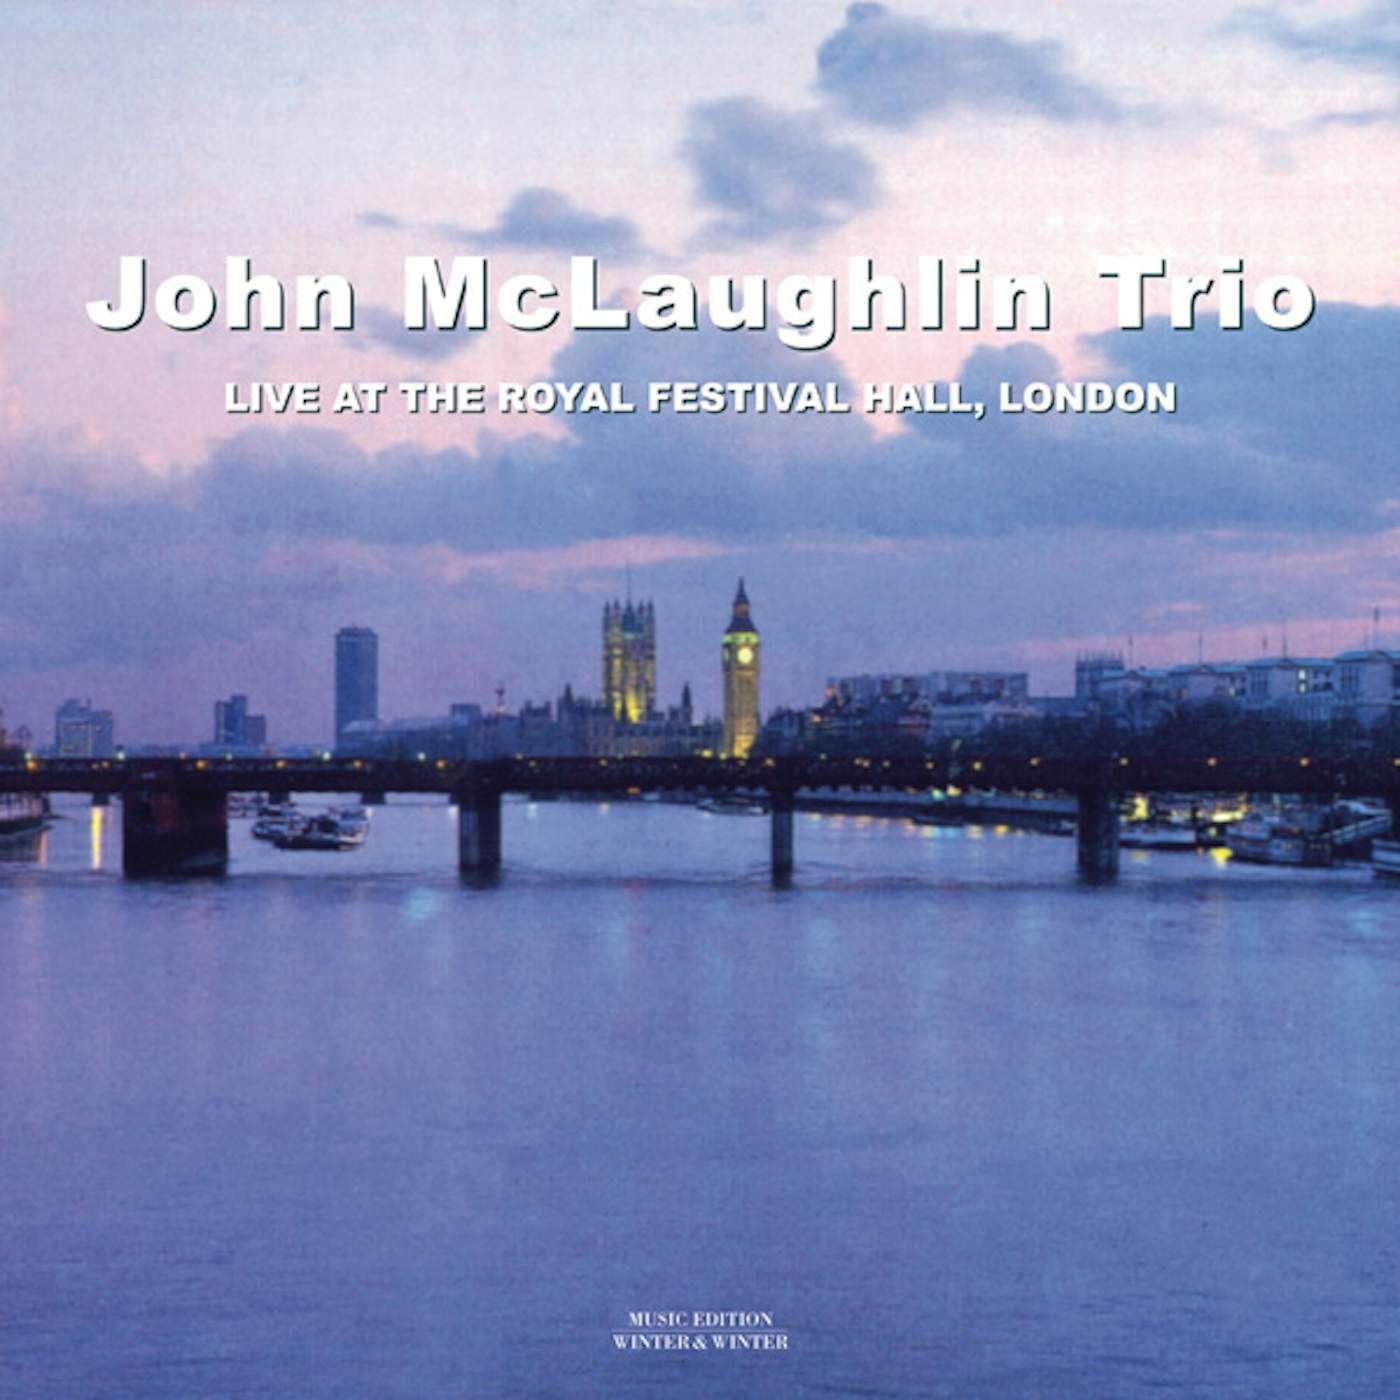 John McLaughlin LIVE AT THE ROYAL FESTIVAL HALL Vinyl Record